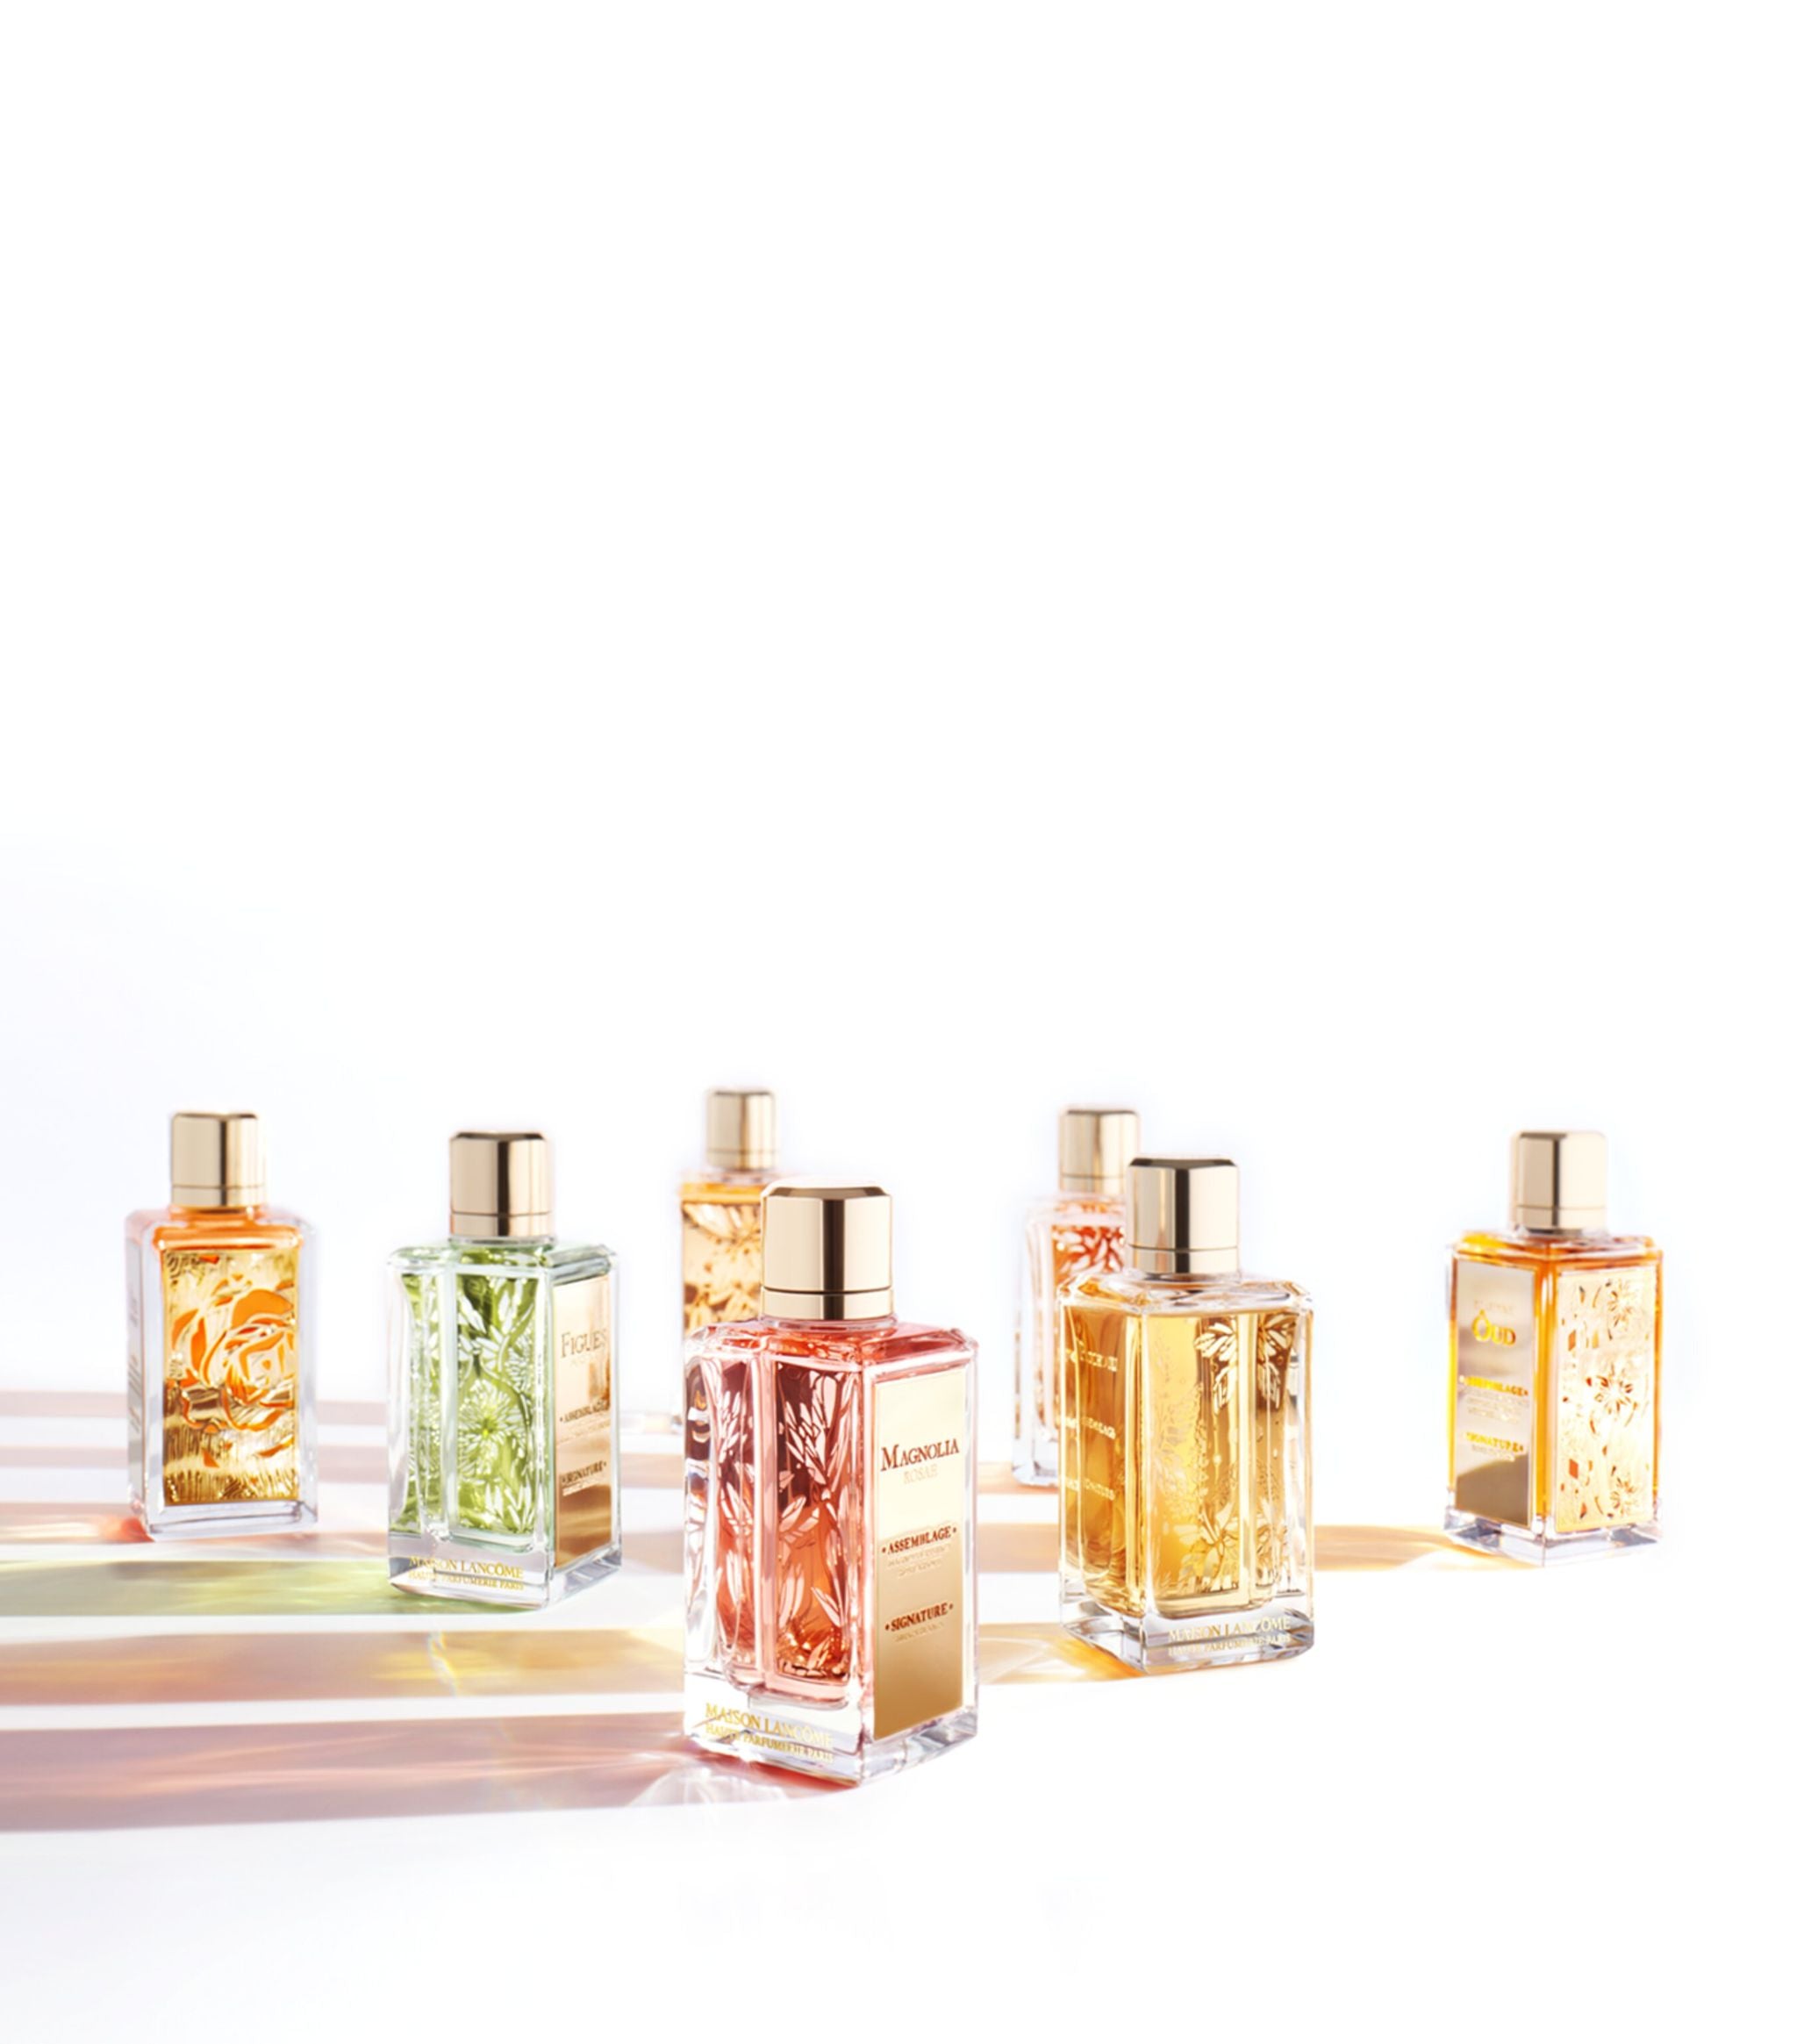 Figues & Agrumes Eau de Parfum (100ml) Perfumes, Aftershaves & Gift Sets Harrods   